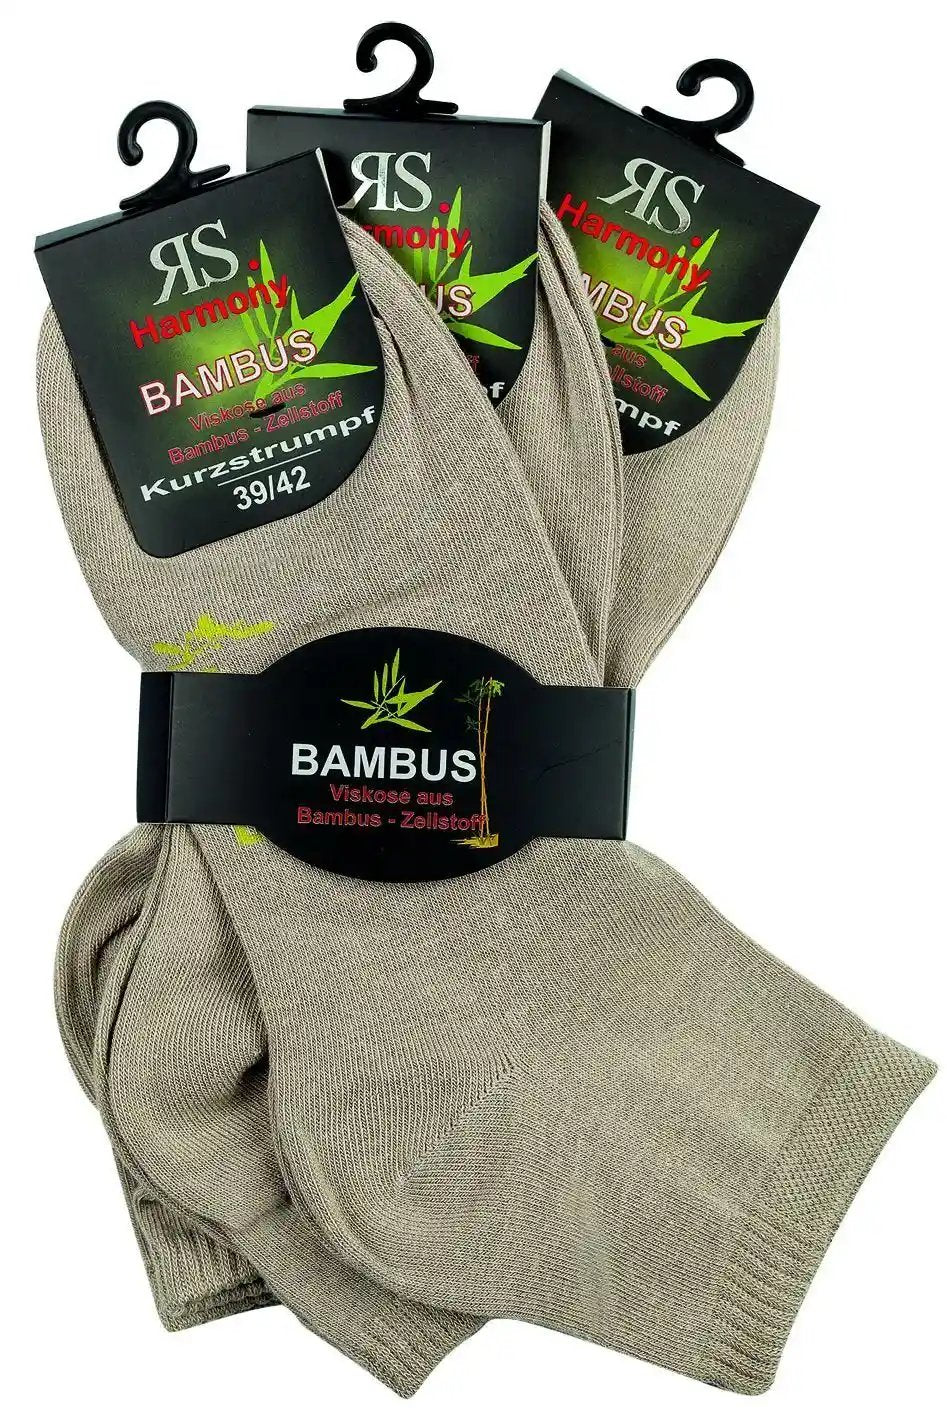 3-15 pairs of beige bamboo viscose short shaft quarter socks